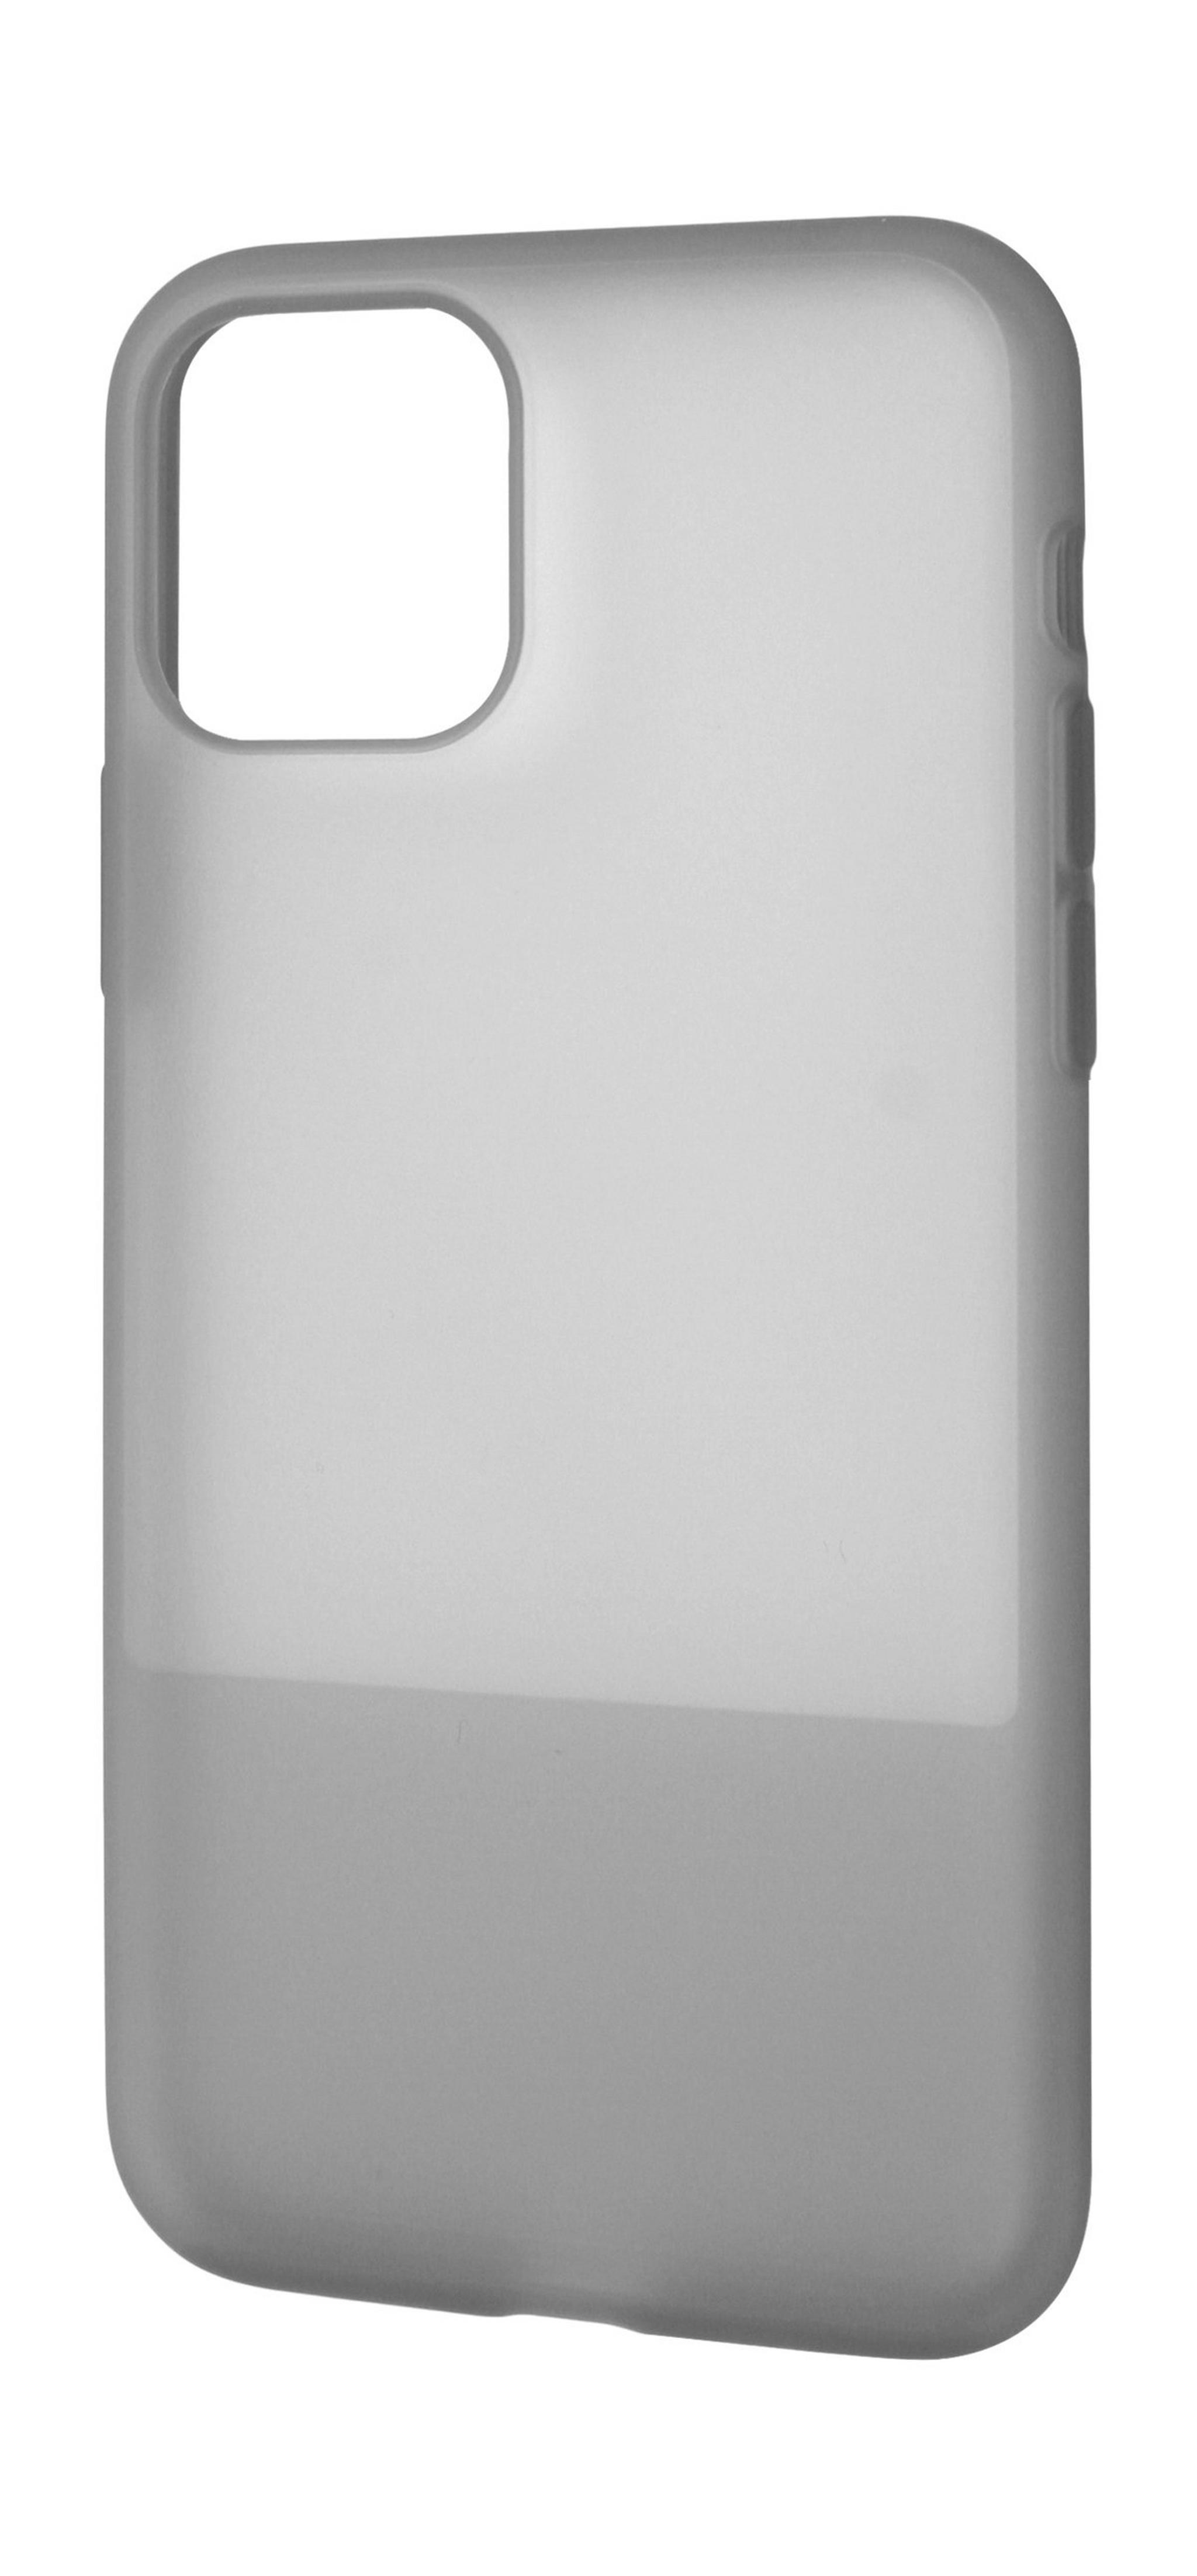 EQ iPhone 11 Contrast Silicone Back Case - Black